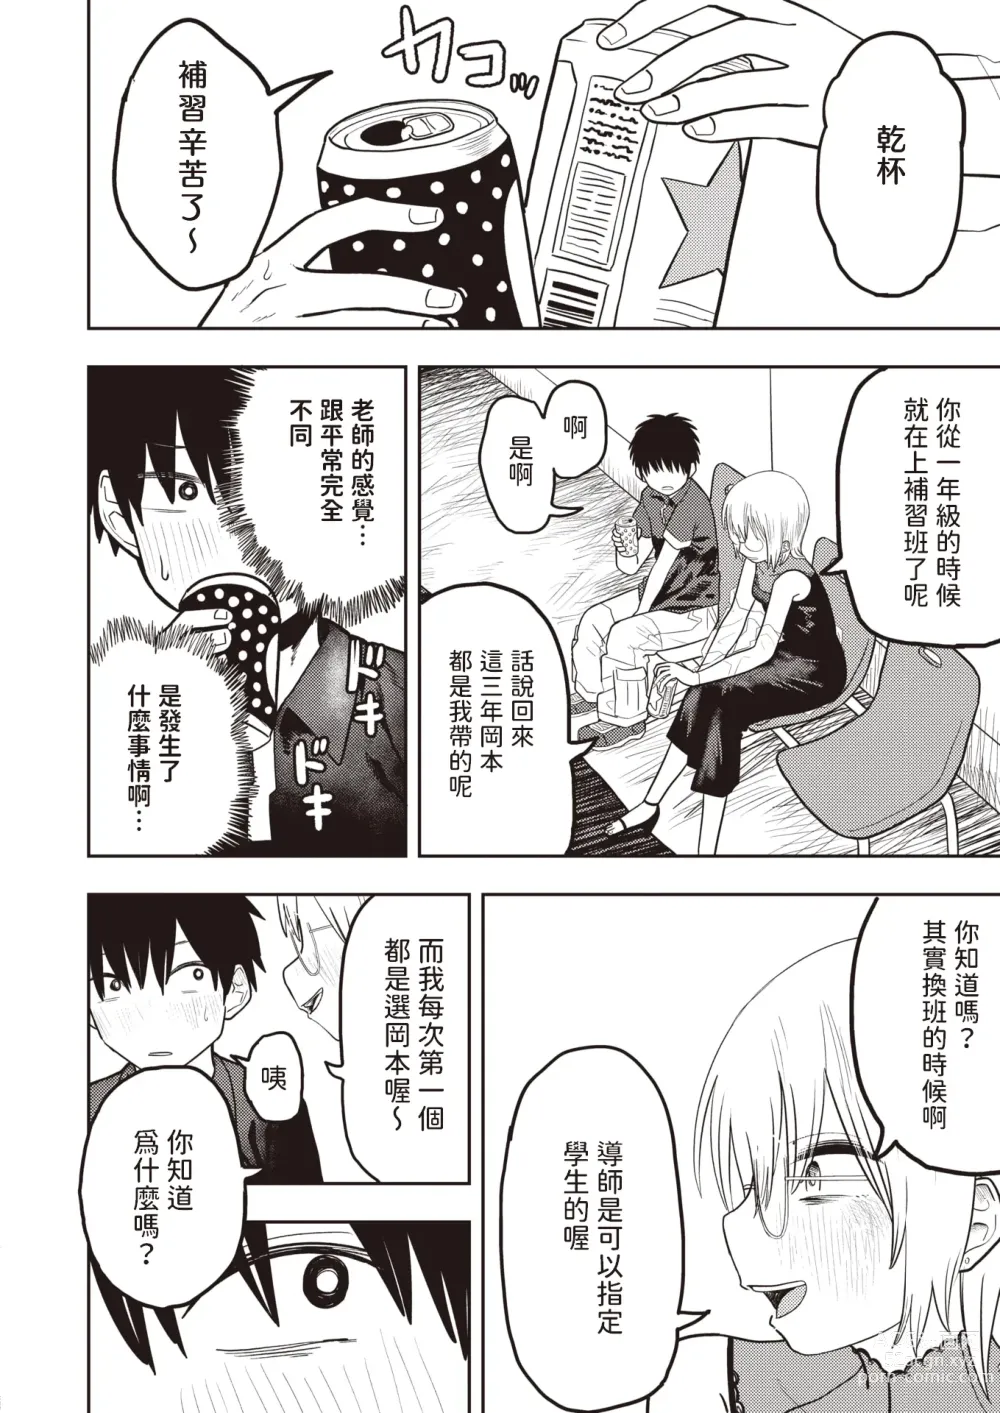 Page 6 of manga Hidoi yo Kiriyama Sensei - Thats really mean!